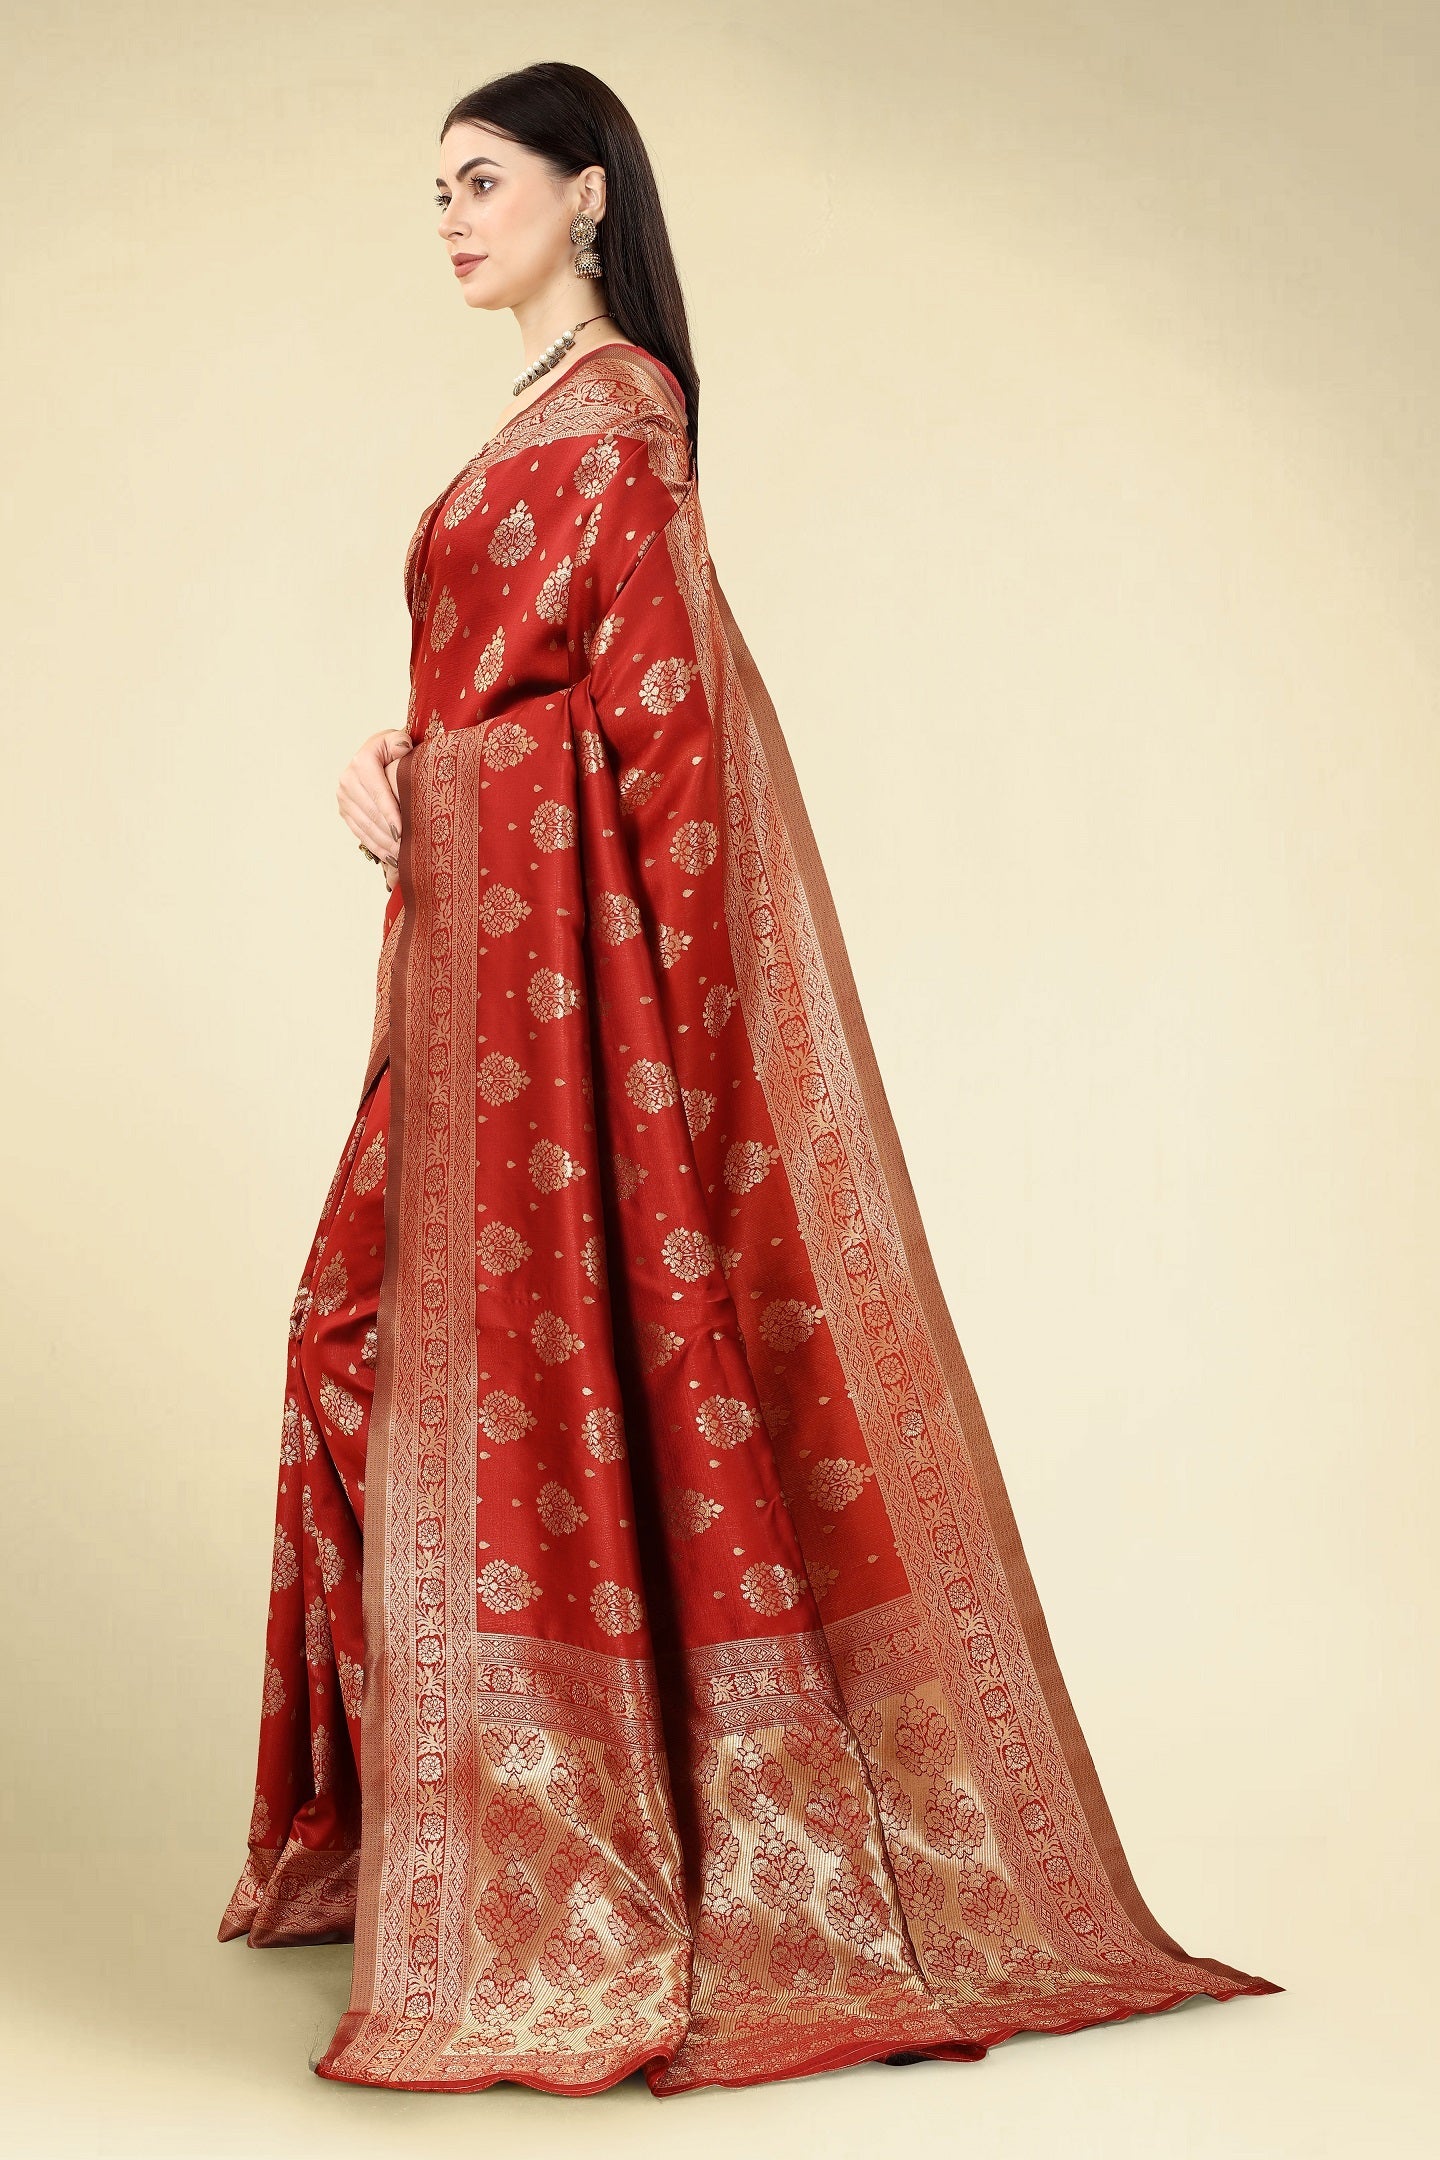 Women's Designer Saree Collection - Dwija Fashion USA